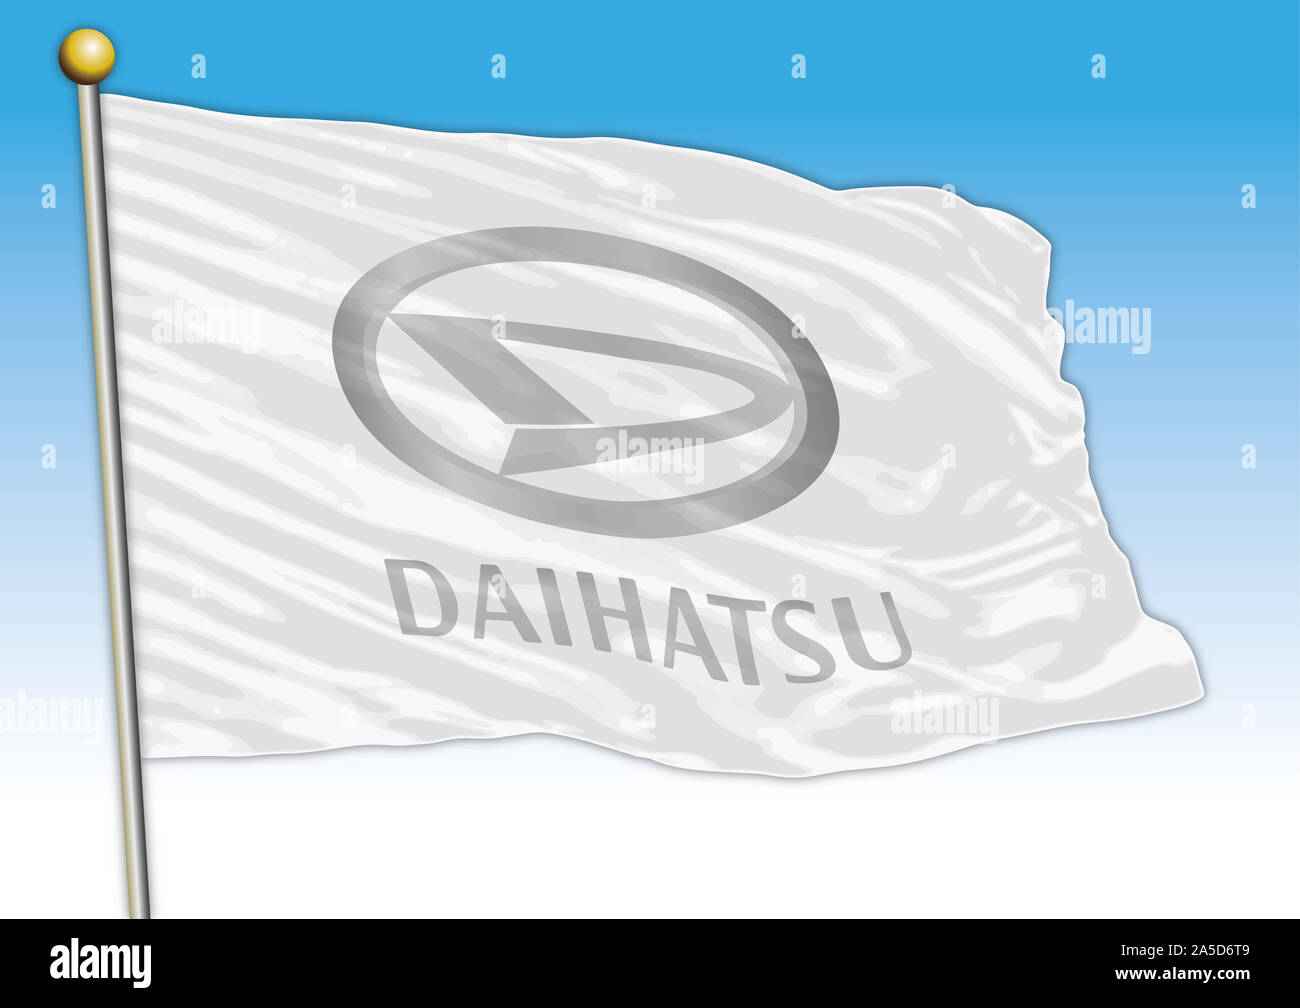 Daihatsu car industrial group, flag with logo, illustration Stock Photo